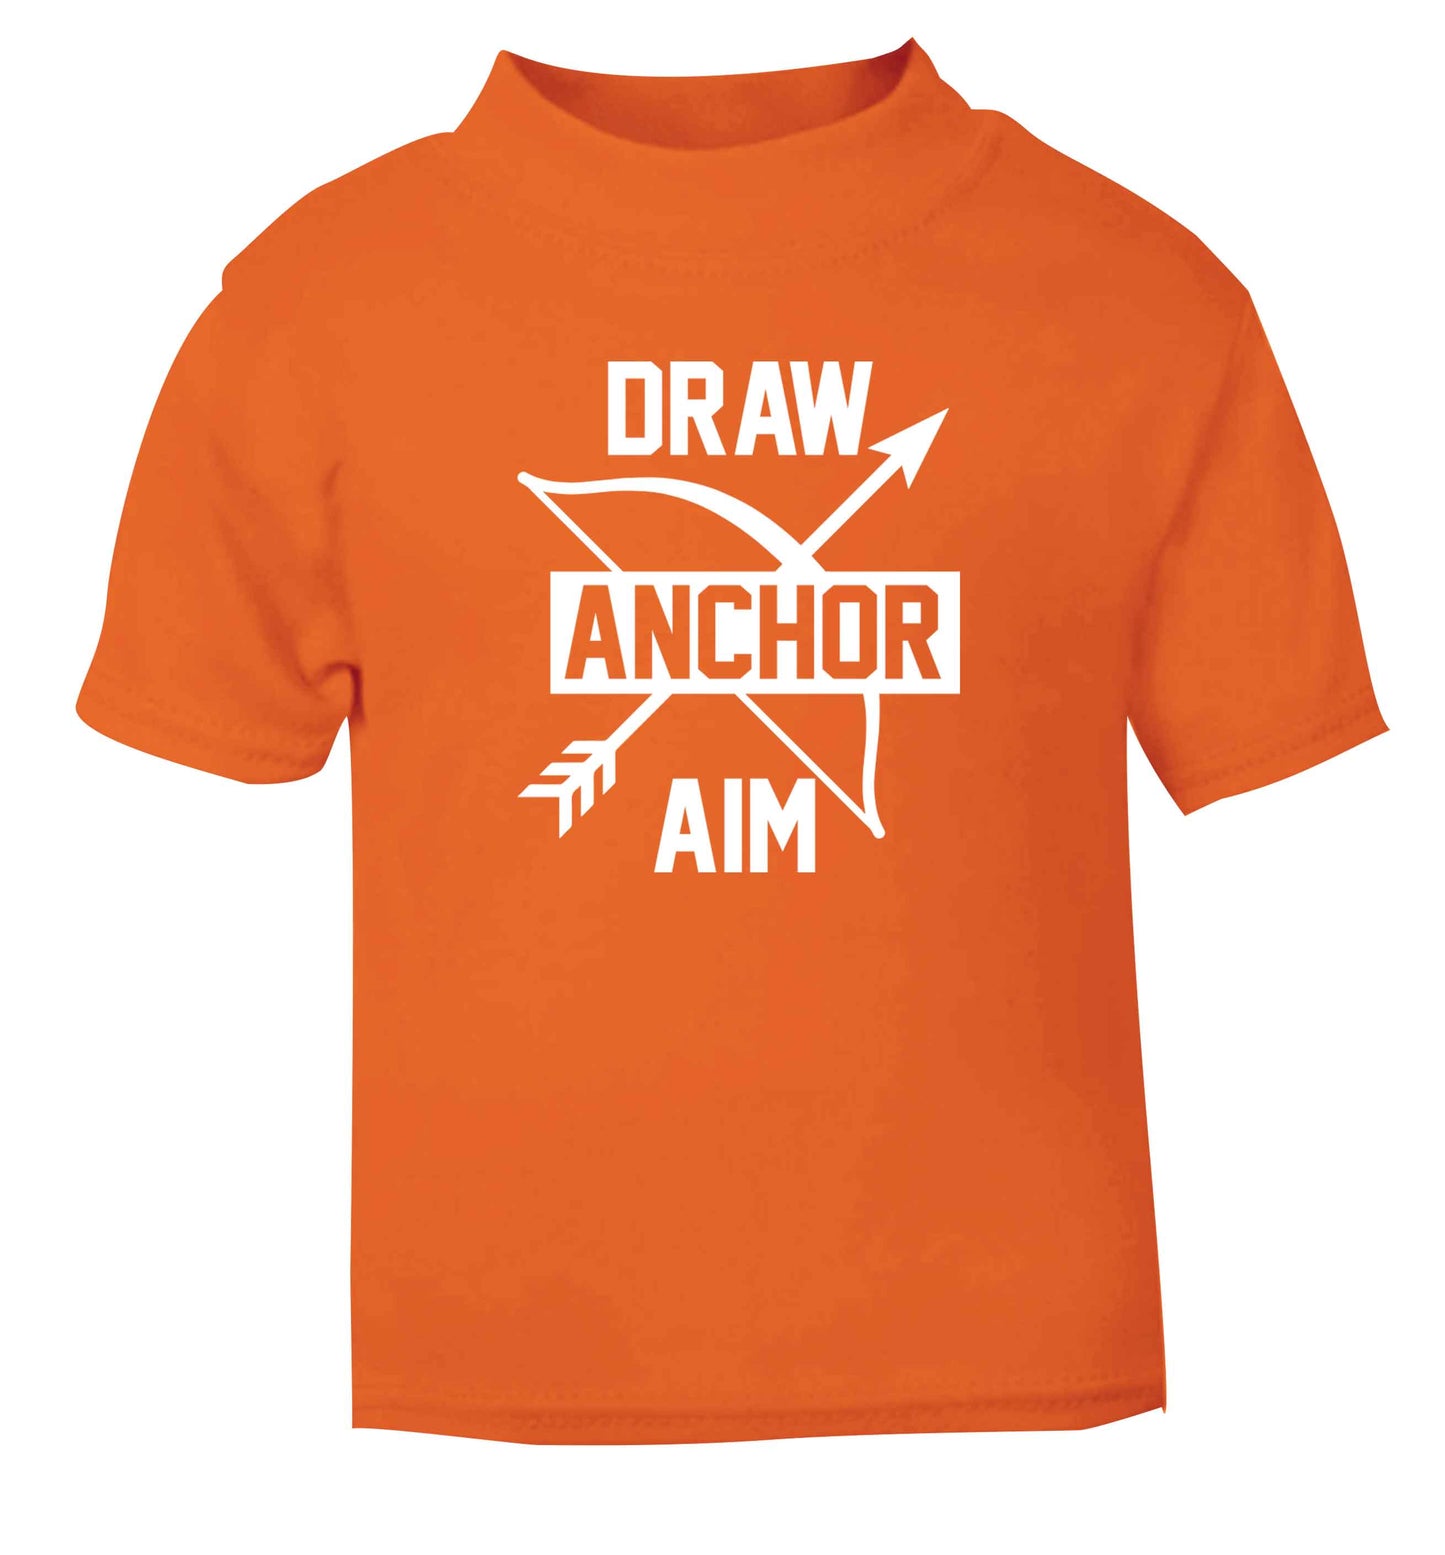 Draw anchor aim orange Baby Toddler Tshirt 2 Years